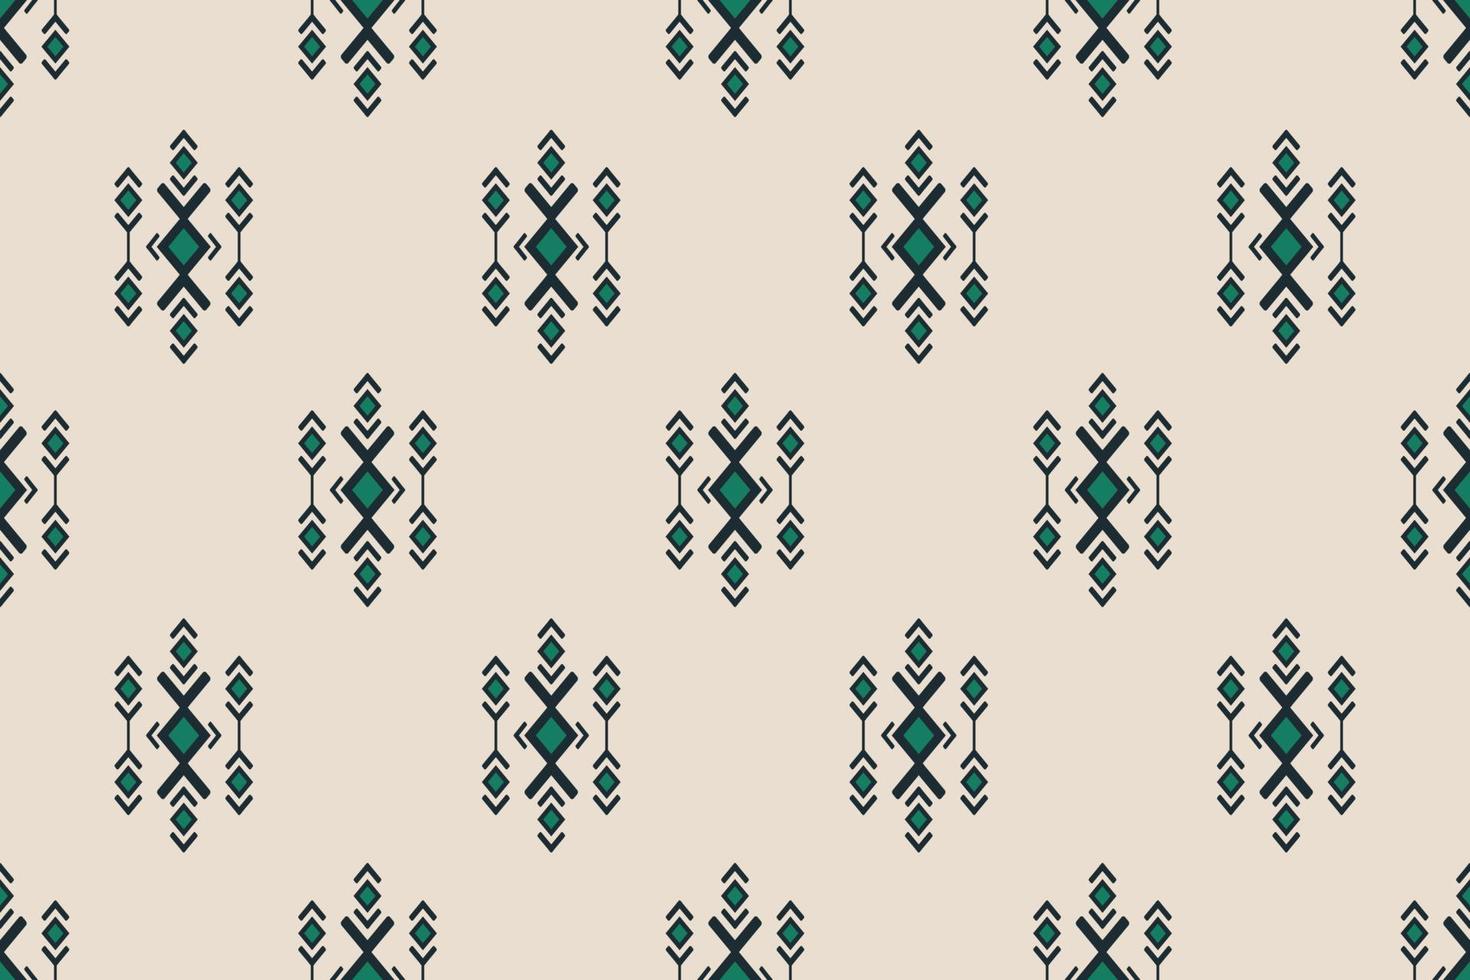 geometrisk etnisk orientalisk sömlös mönster traditionell. tyg indisk stil. design för bakgrund, tapet, vektor illustration, tyg, Kläder, matta, textil, batik, broderi.